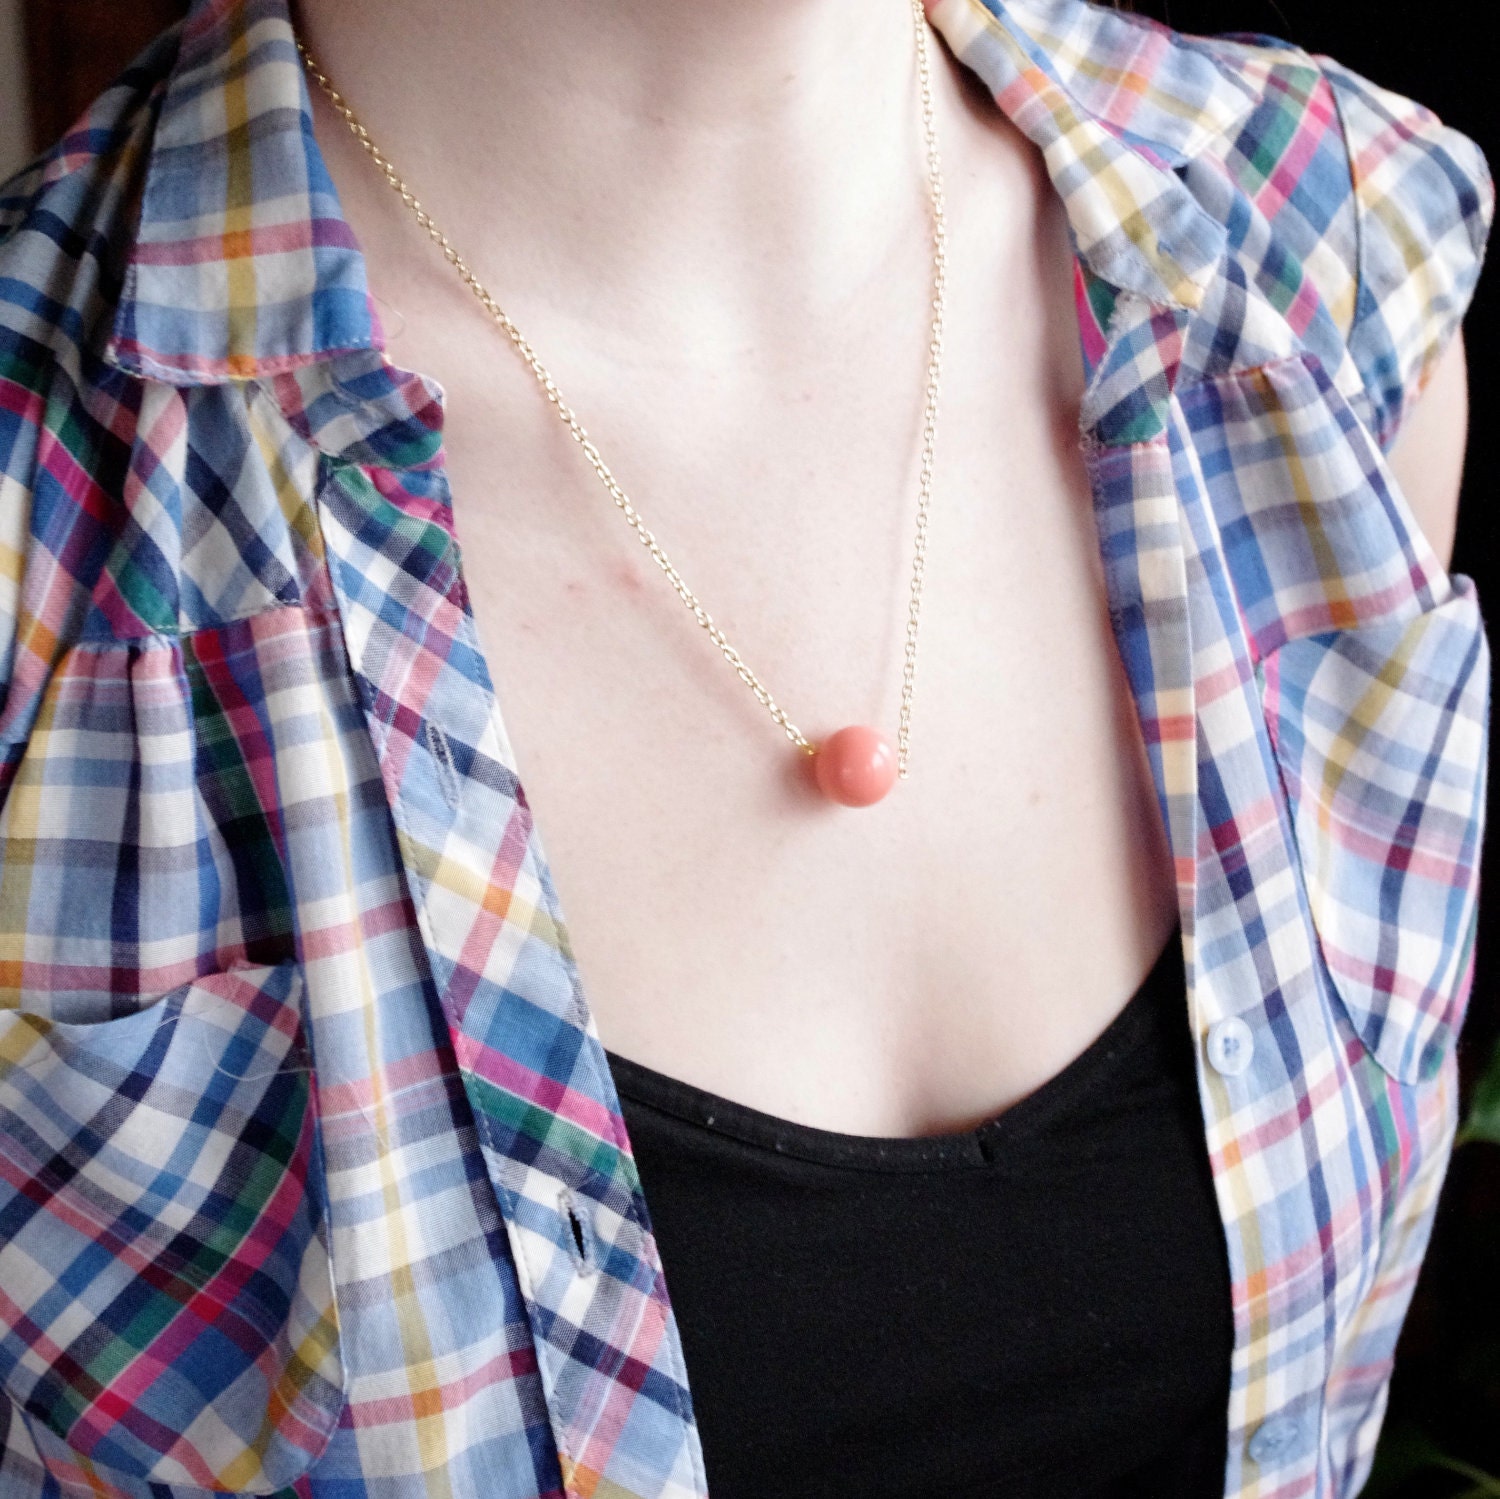 Upcycled Vintage Peach Single Bead Necklace using an - regansbrain